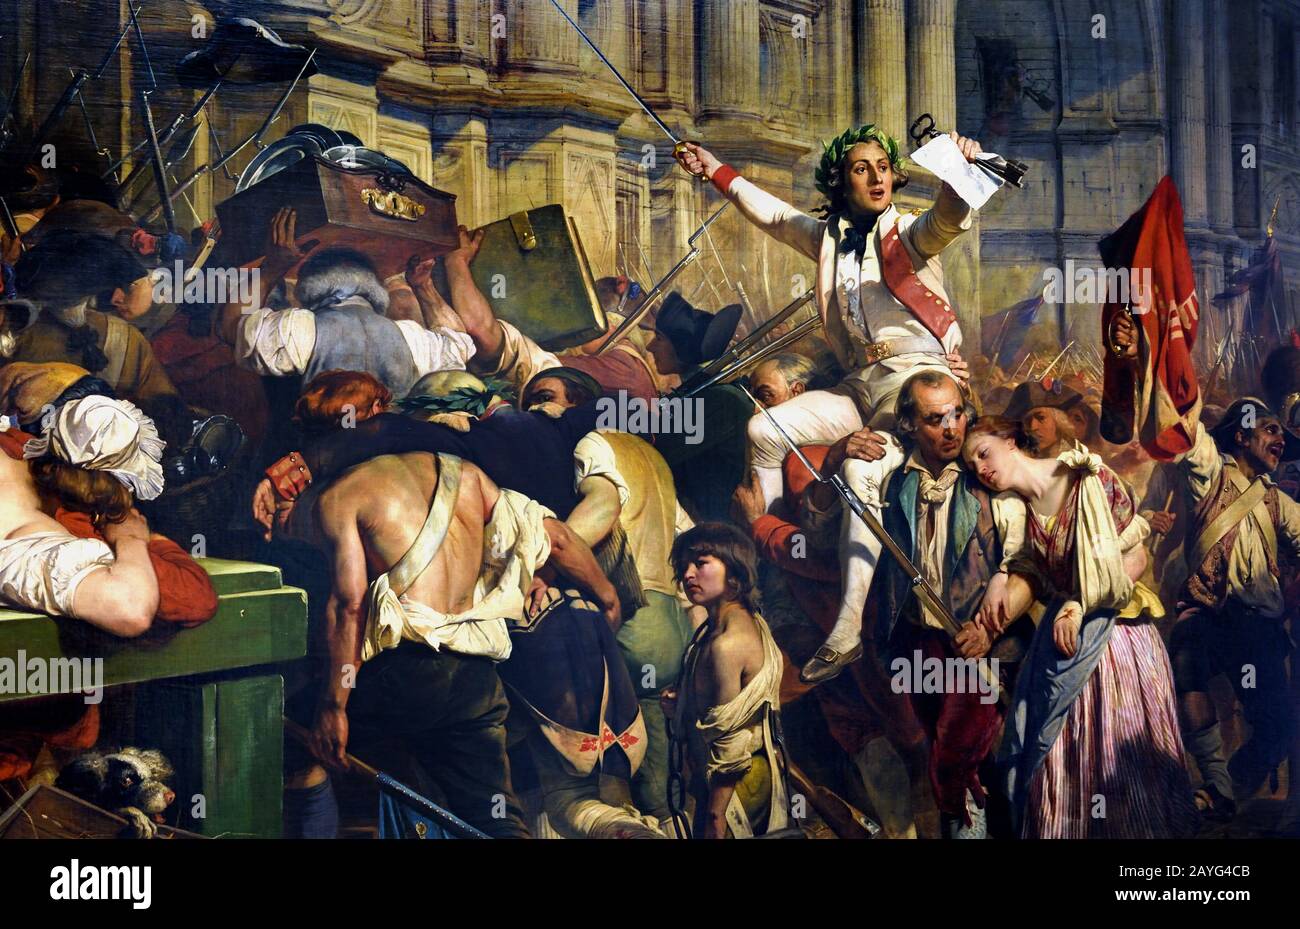 Les Vainqueurs de la Bastille devant l'hôtel de Ville juillet 1789 - i vincitori della Bastiglia di fronte al Hôtel de Ville luglio 1789 da Hippolyte Paul Delaroche, 1850, Francia, francese. Foto Stock